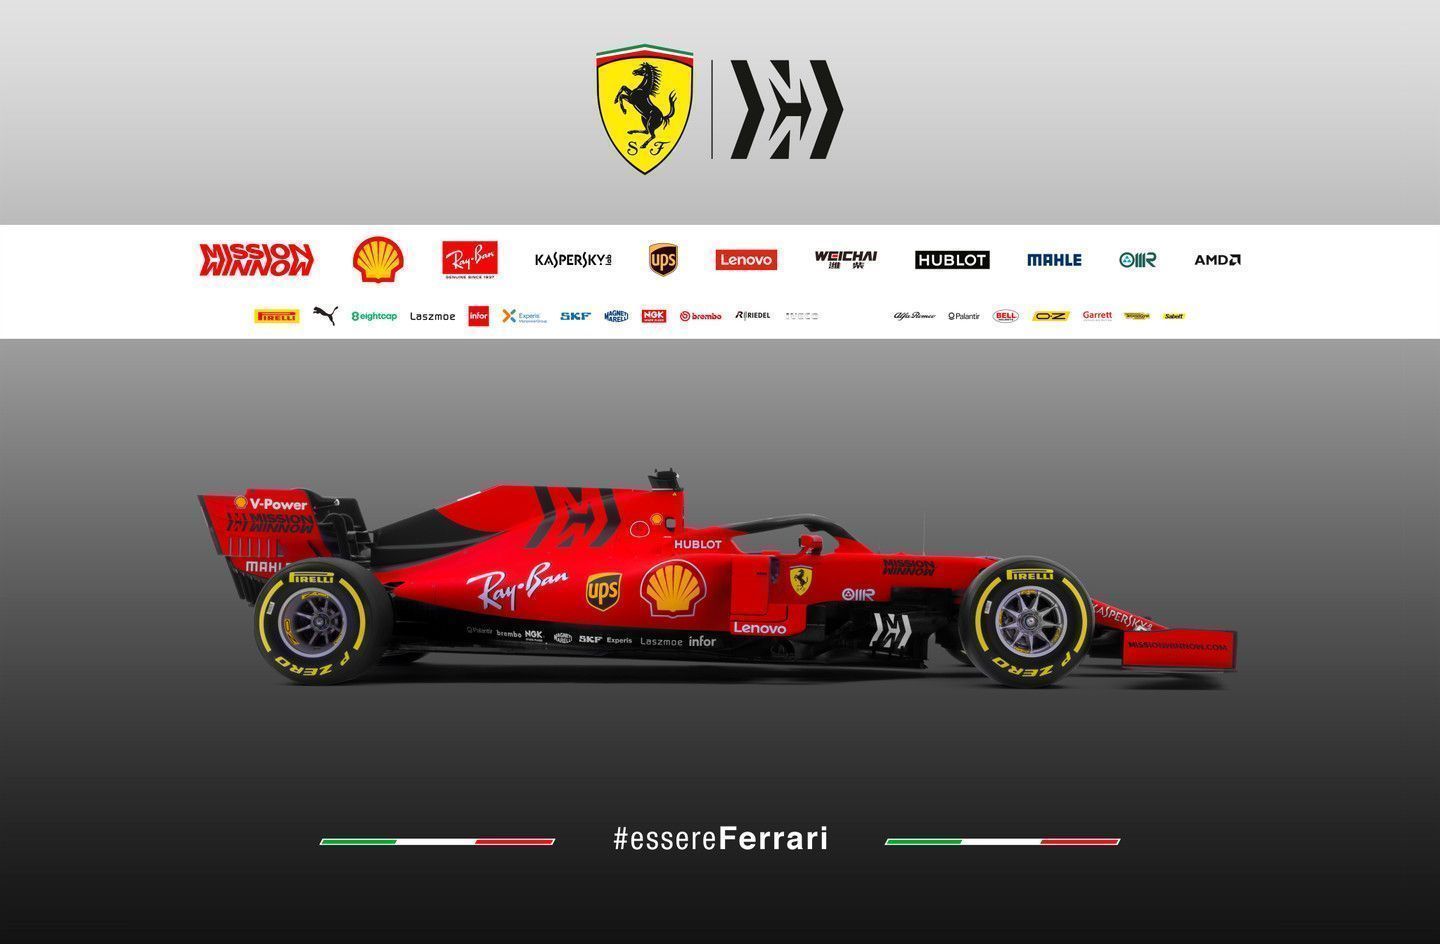 2019 Ferrari F1 car and livery